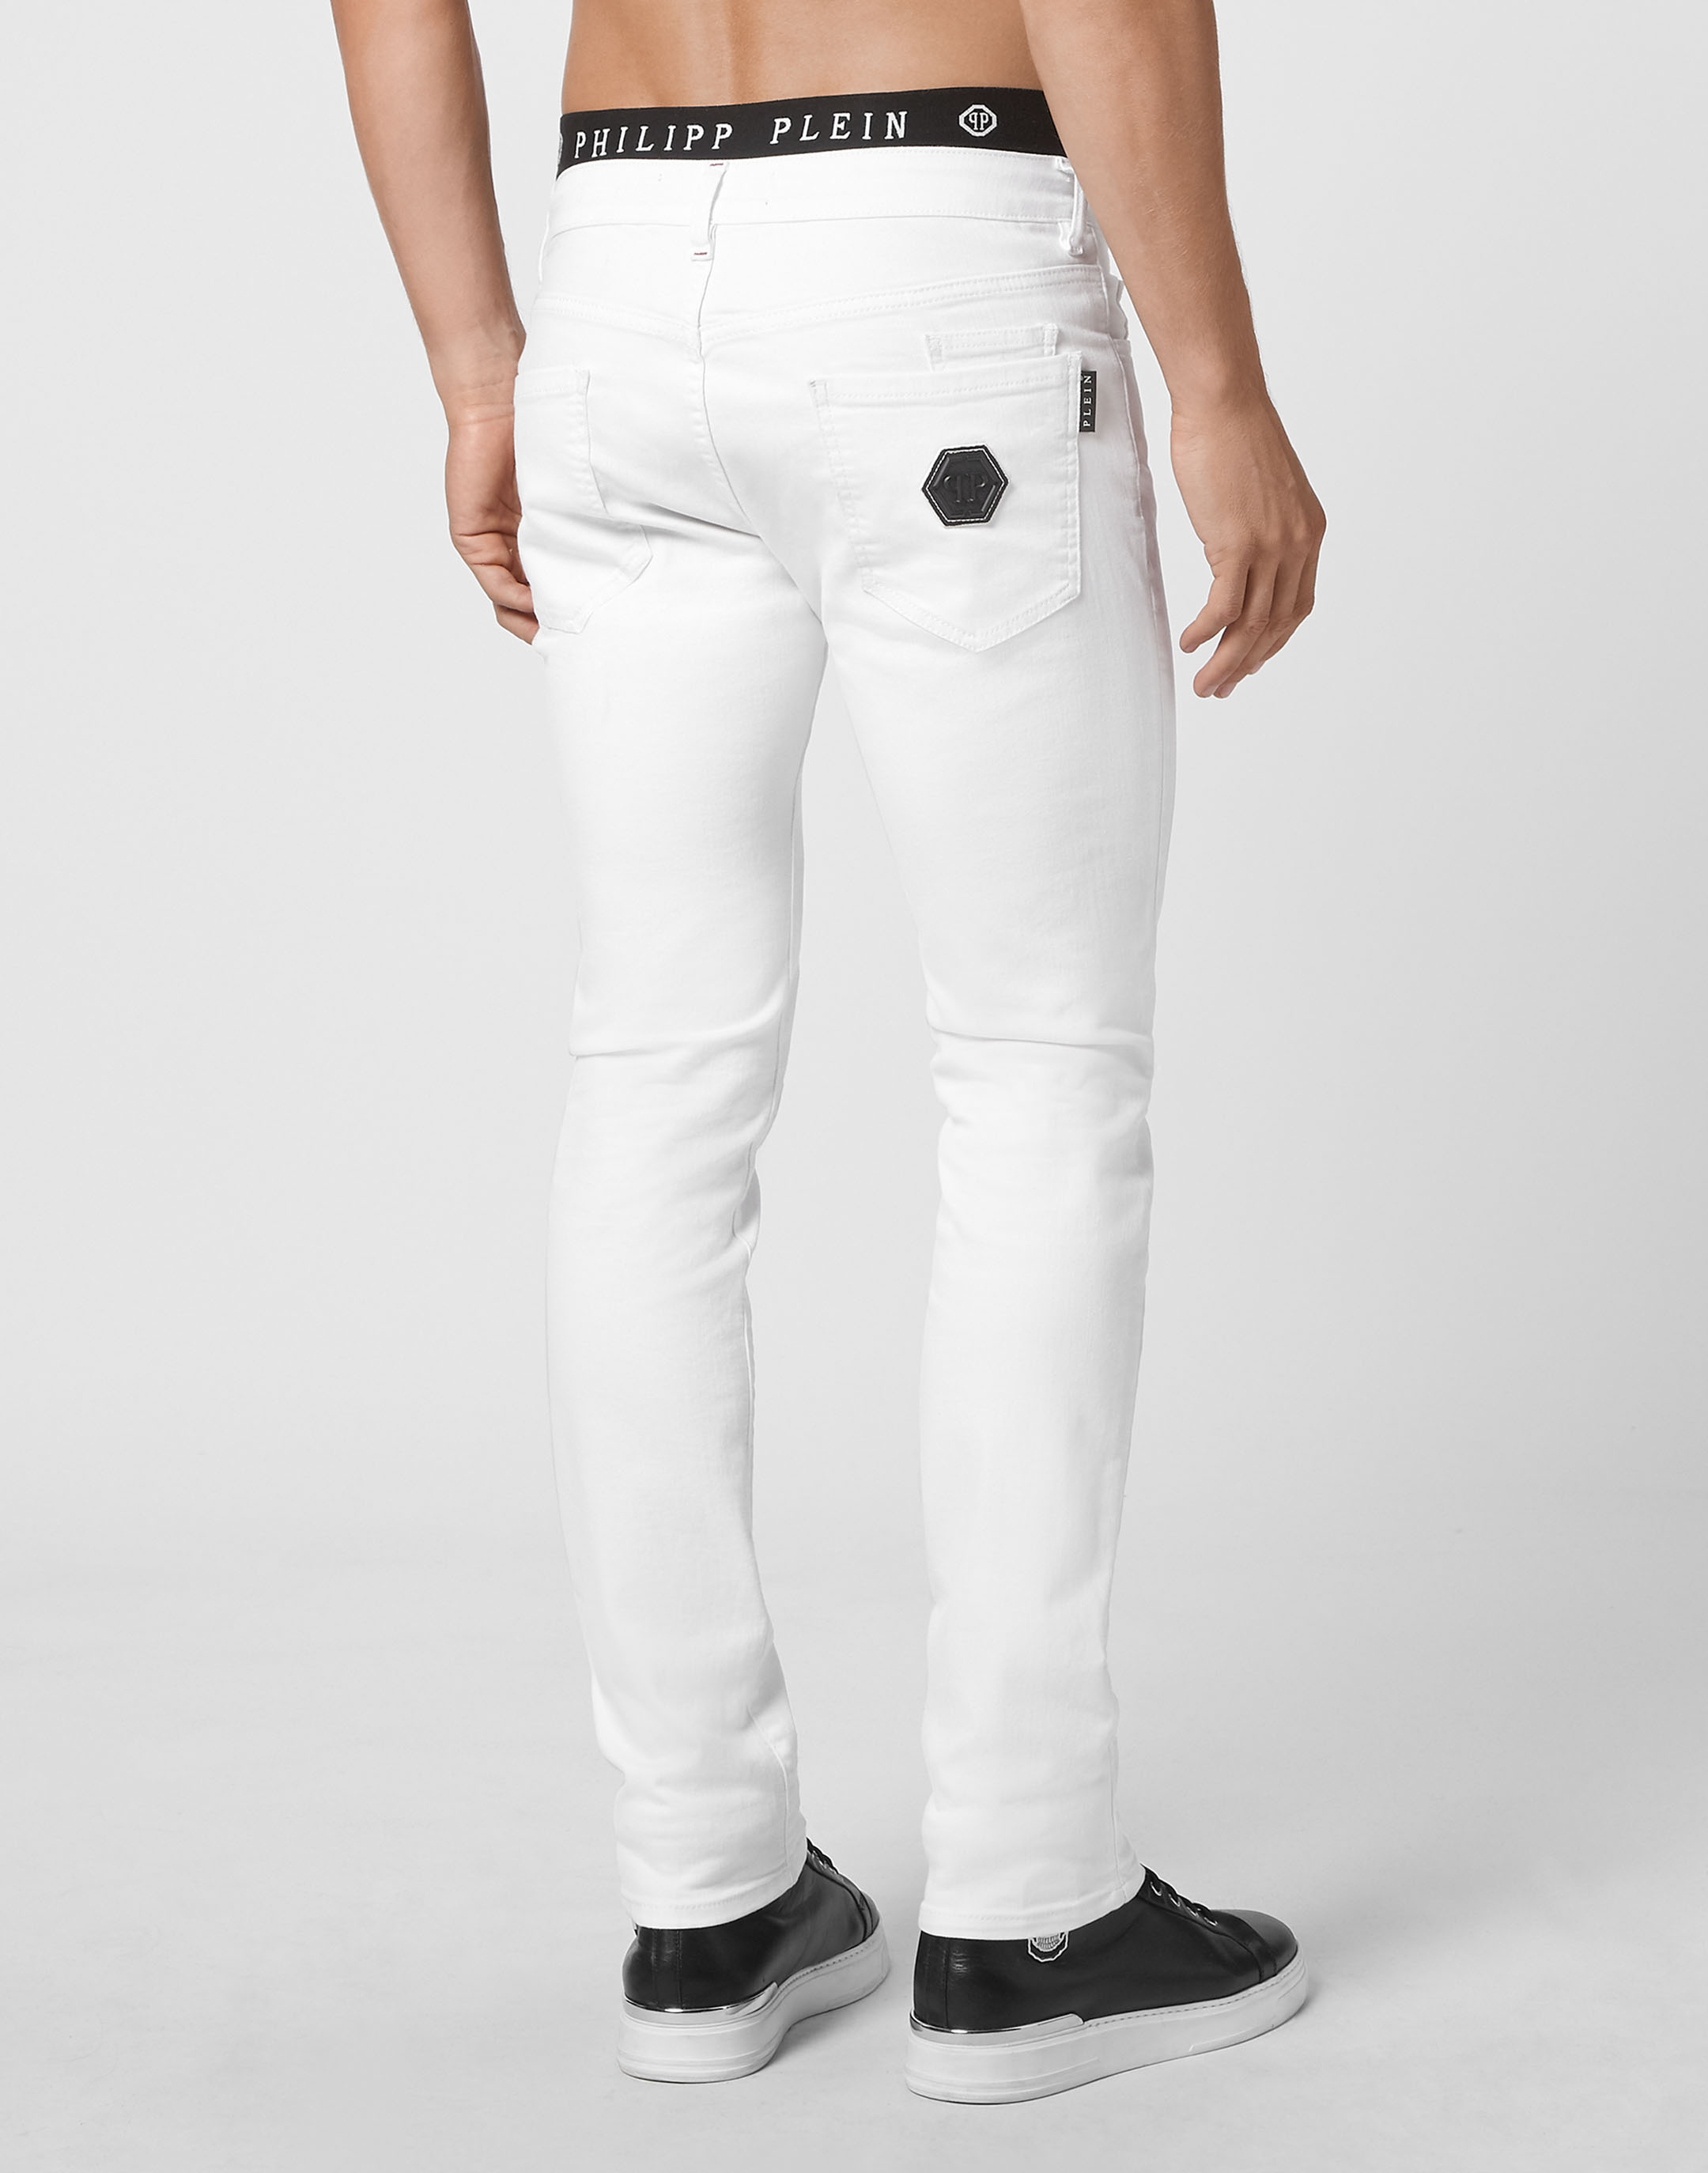 Denim Trousers Super Straight Cut Iconic Plein | Philipp Plein Outlet